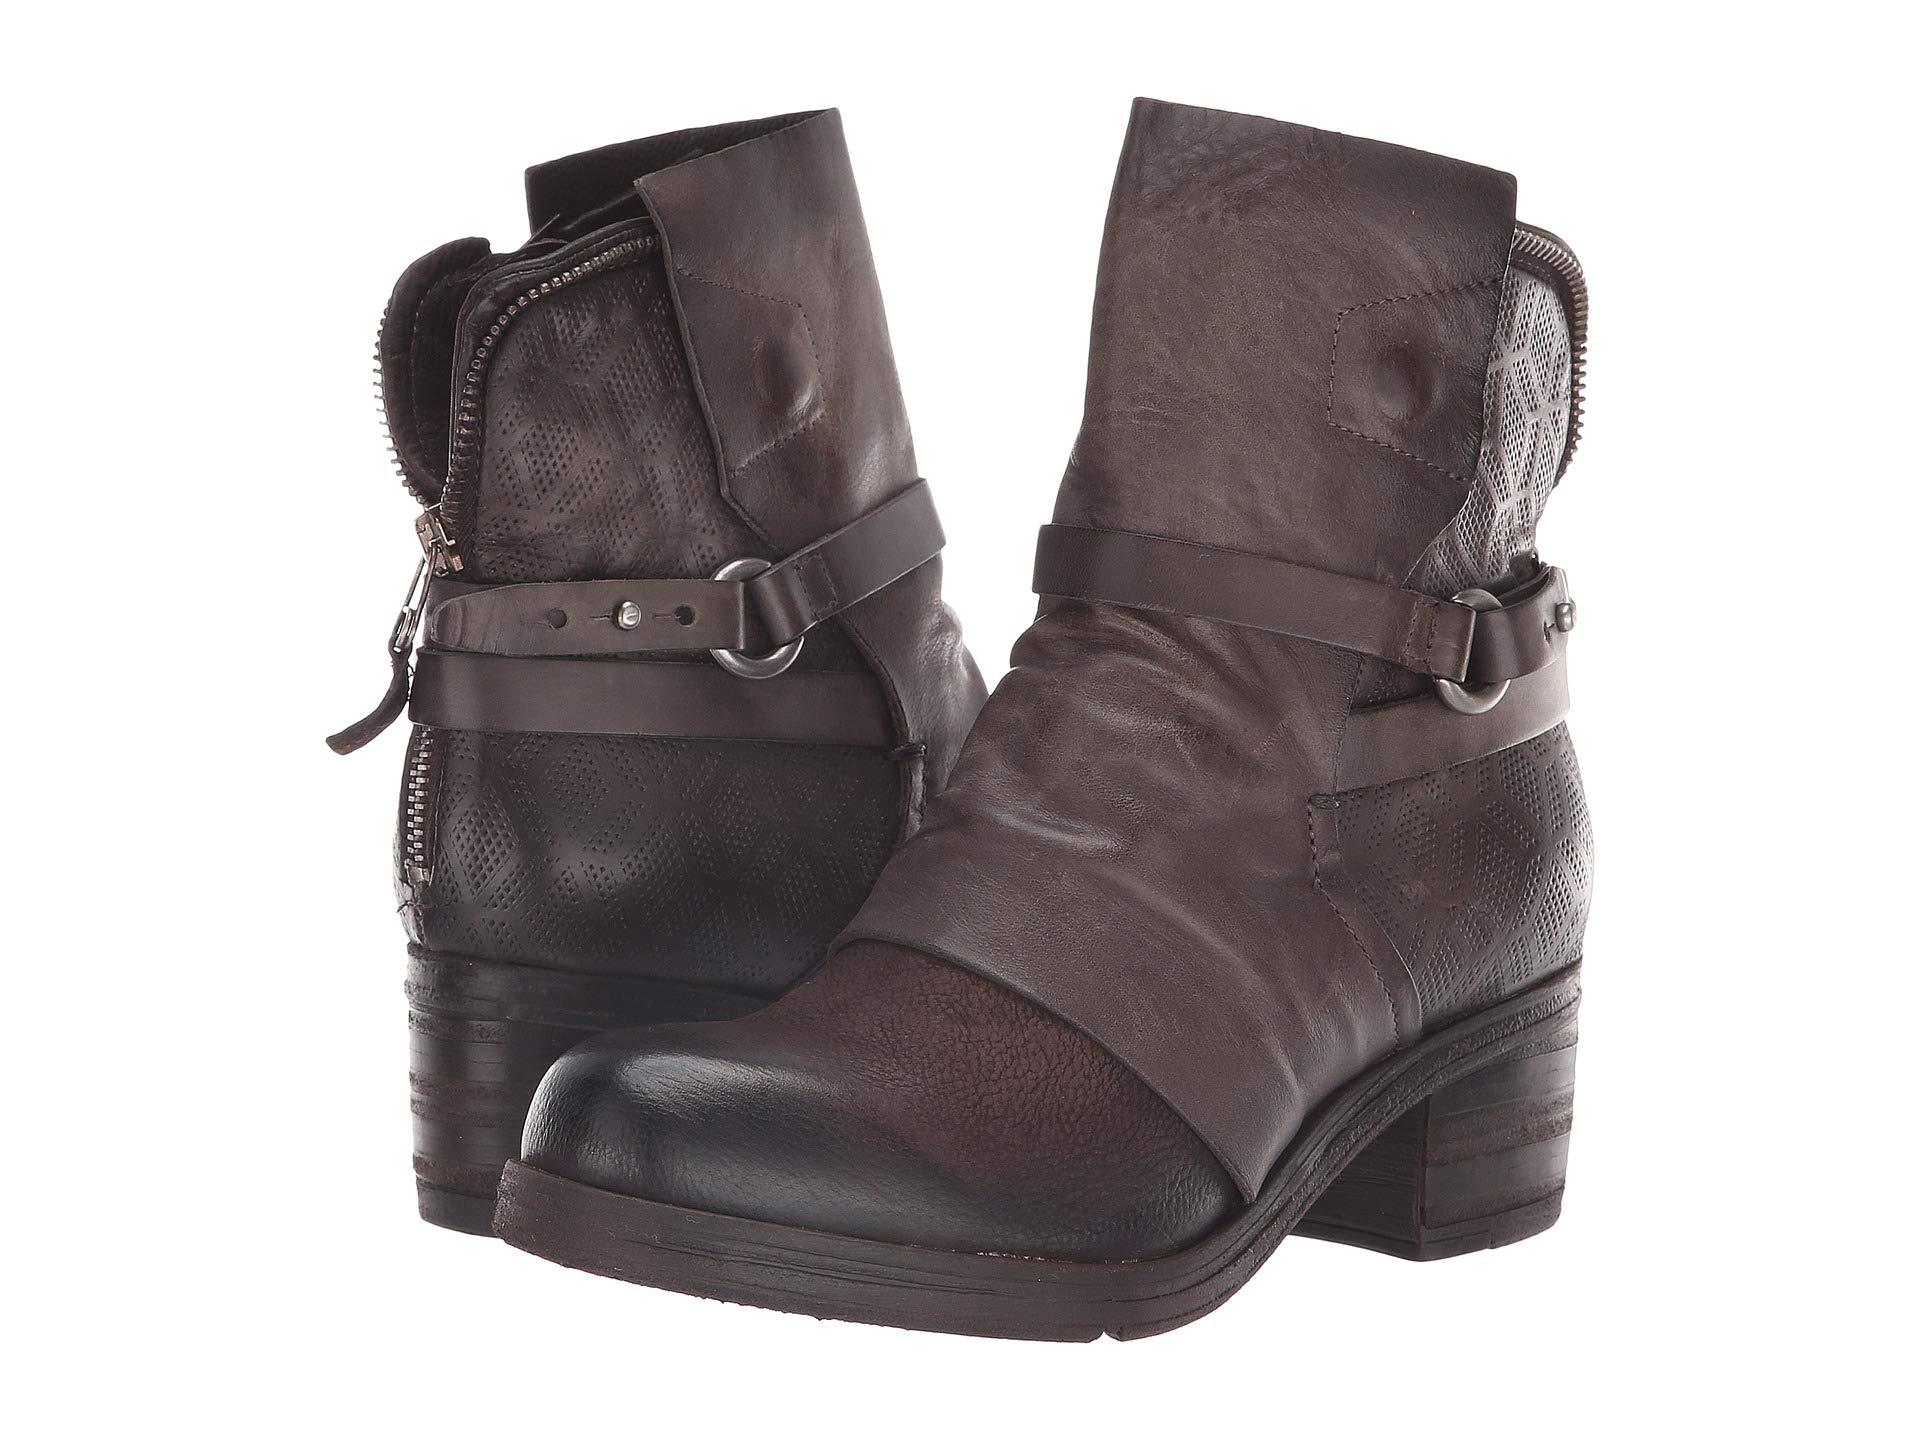 Miz Mooz Leather Salma (mocha) Boots in 